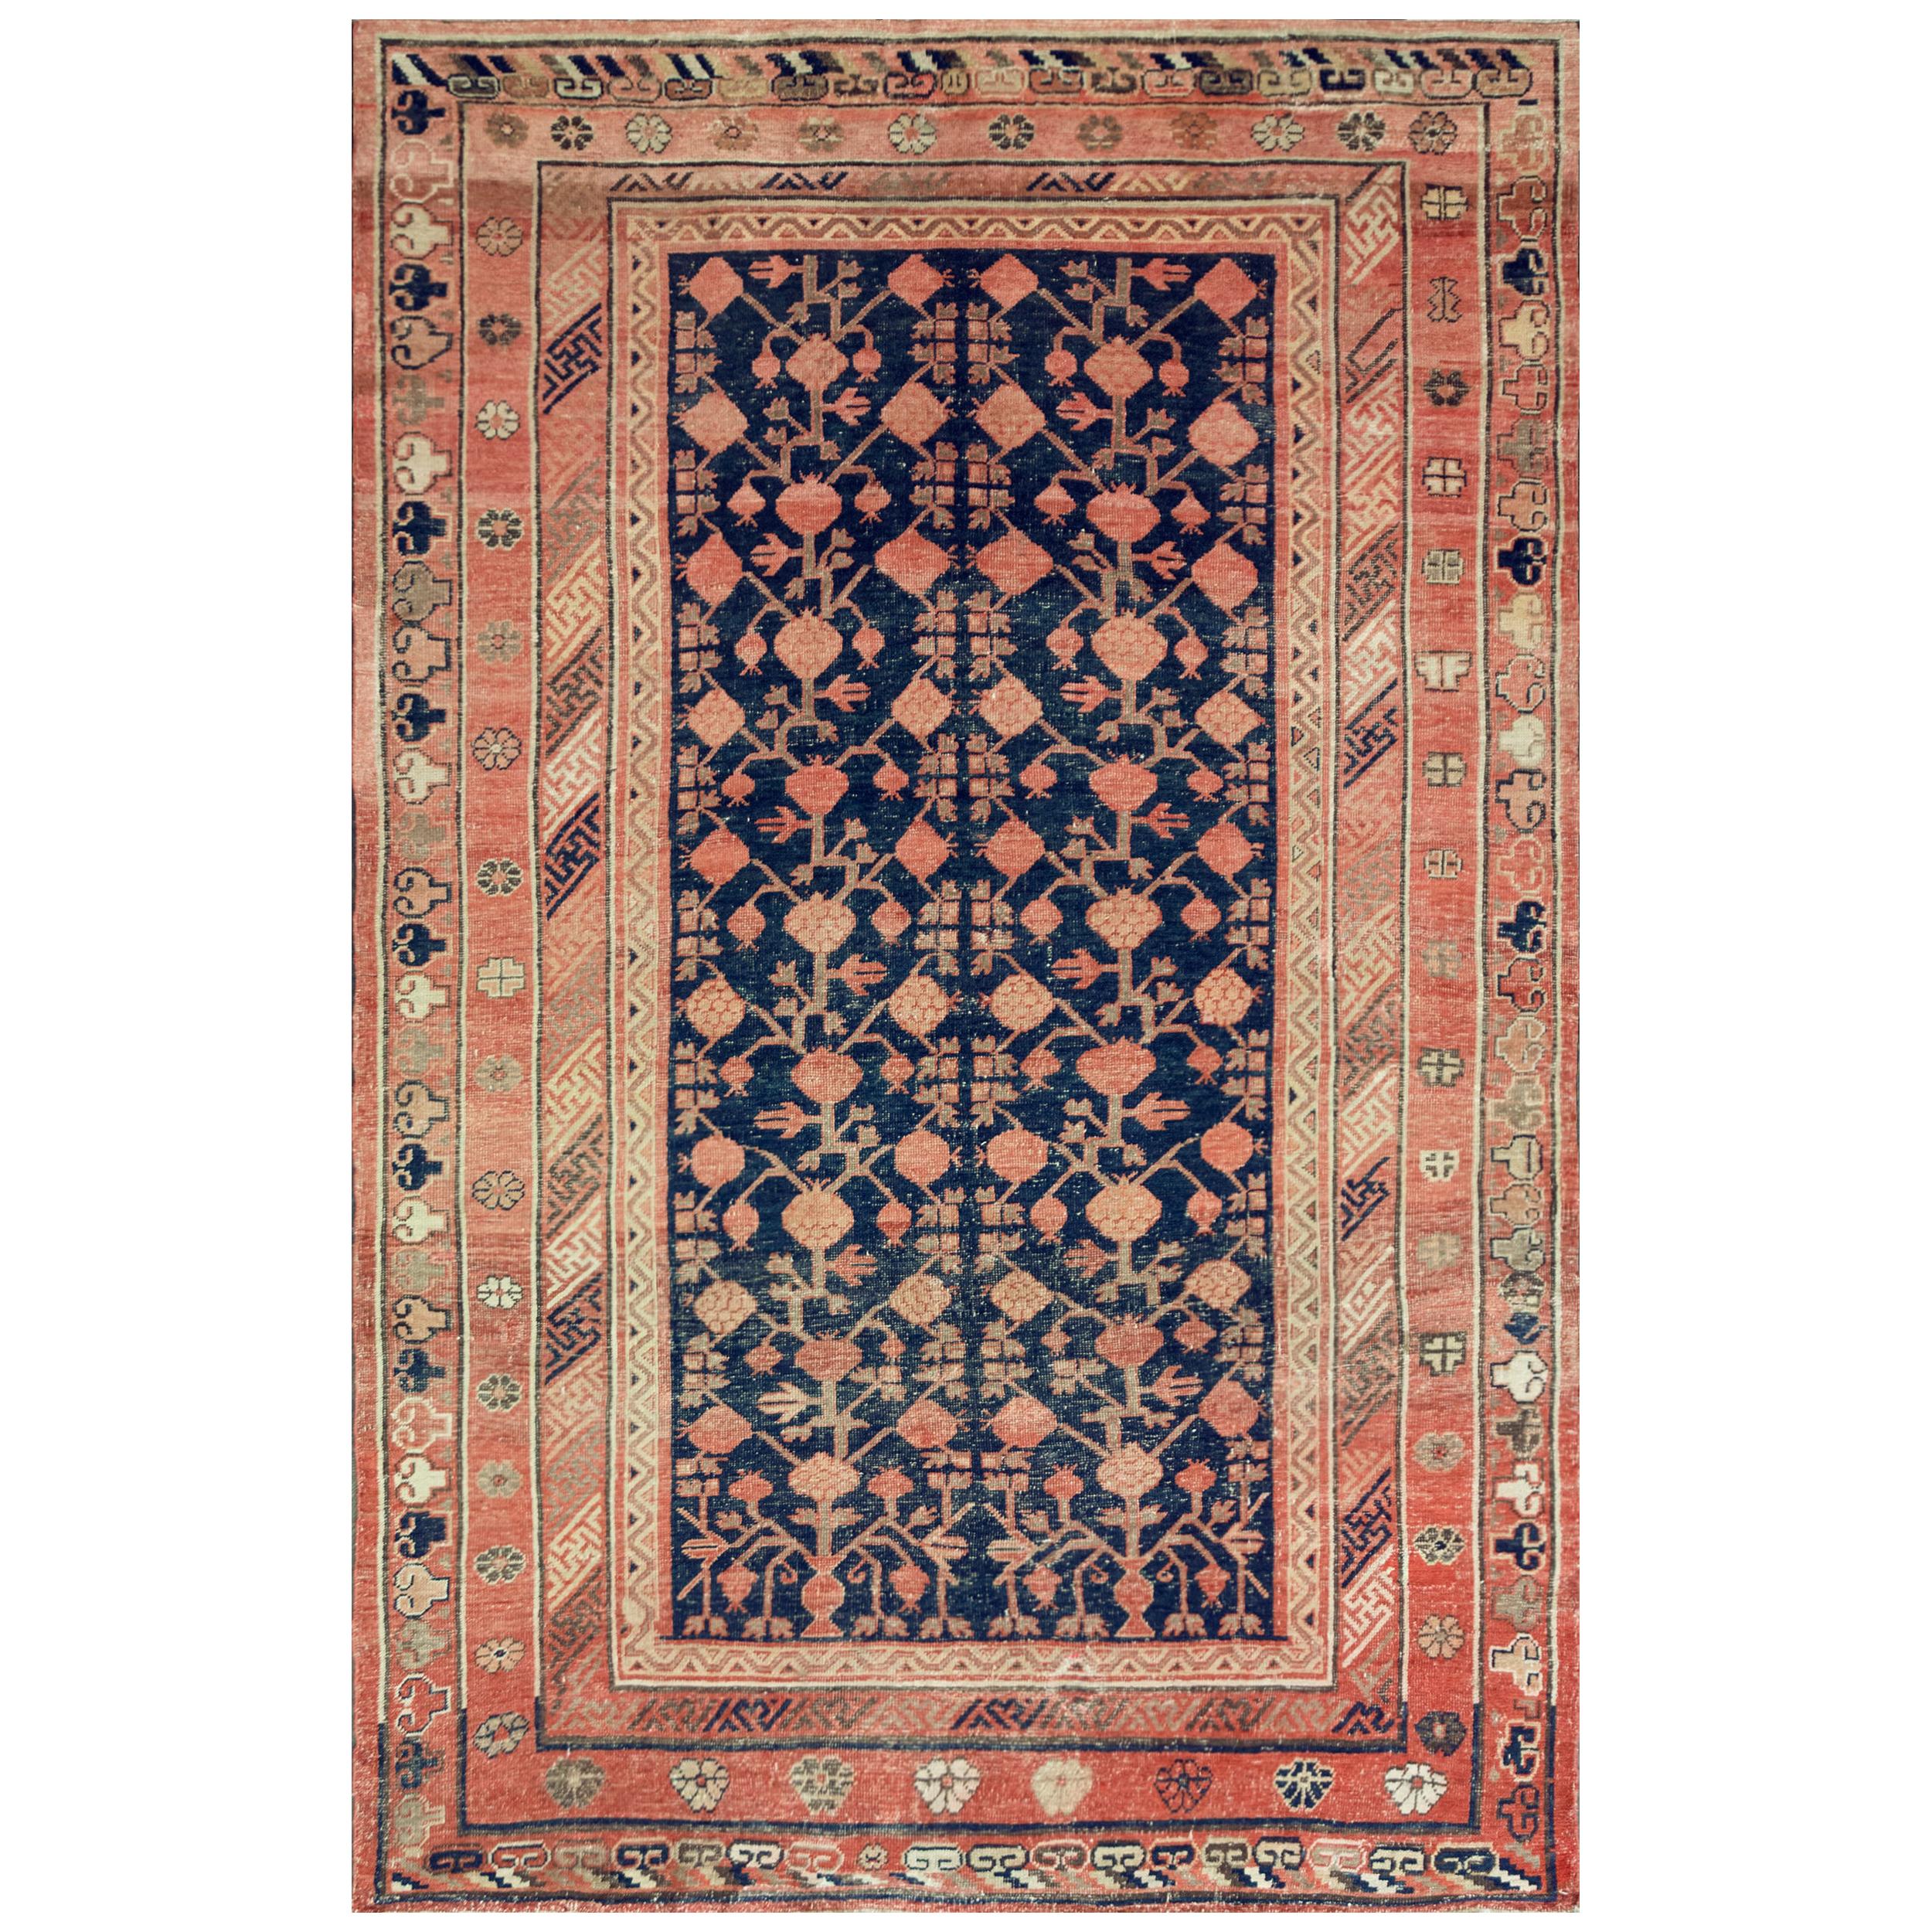 Mid 19th Century Wool Handwoven Khotan Rug